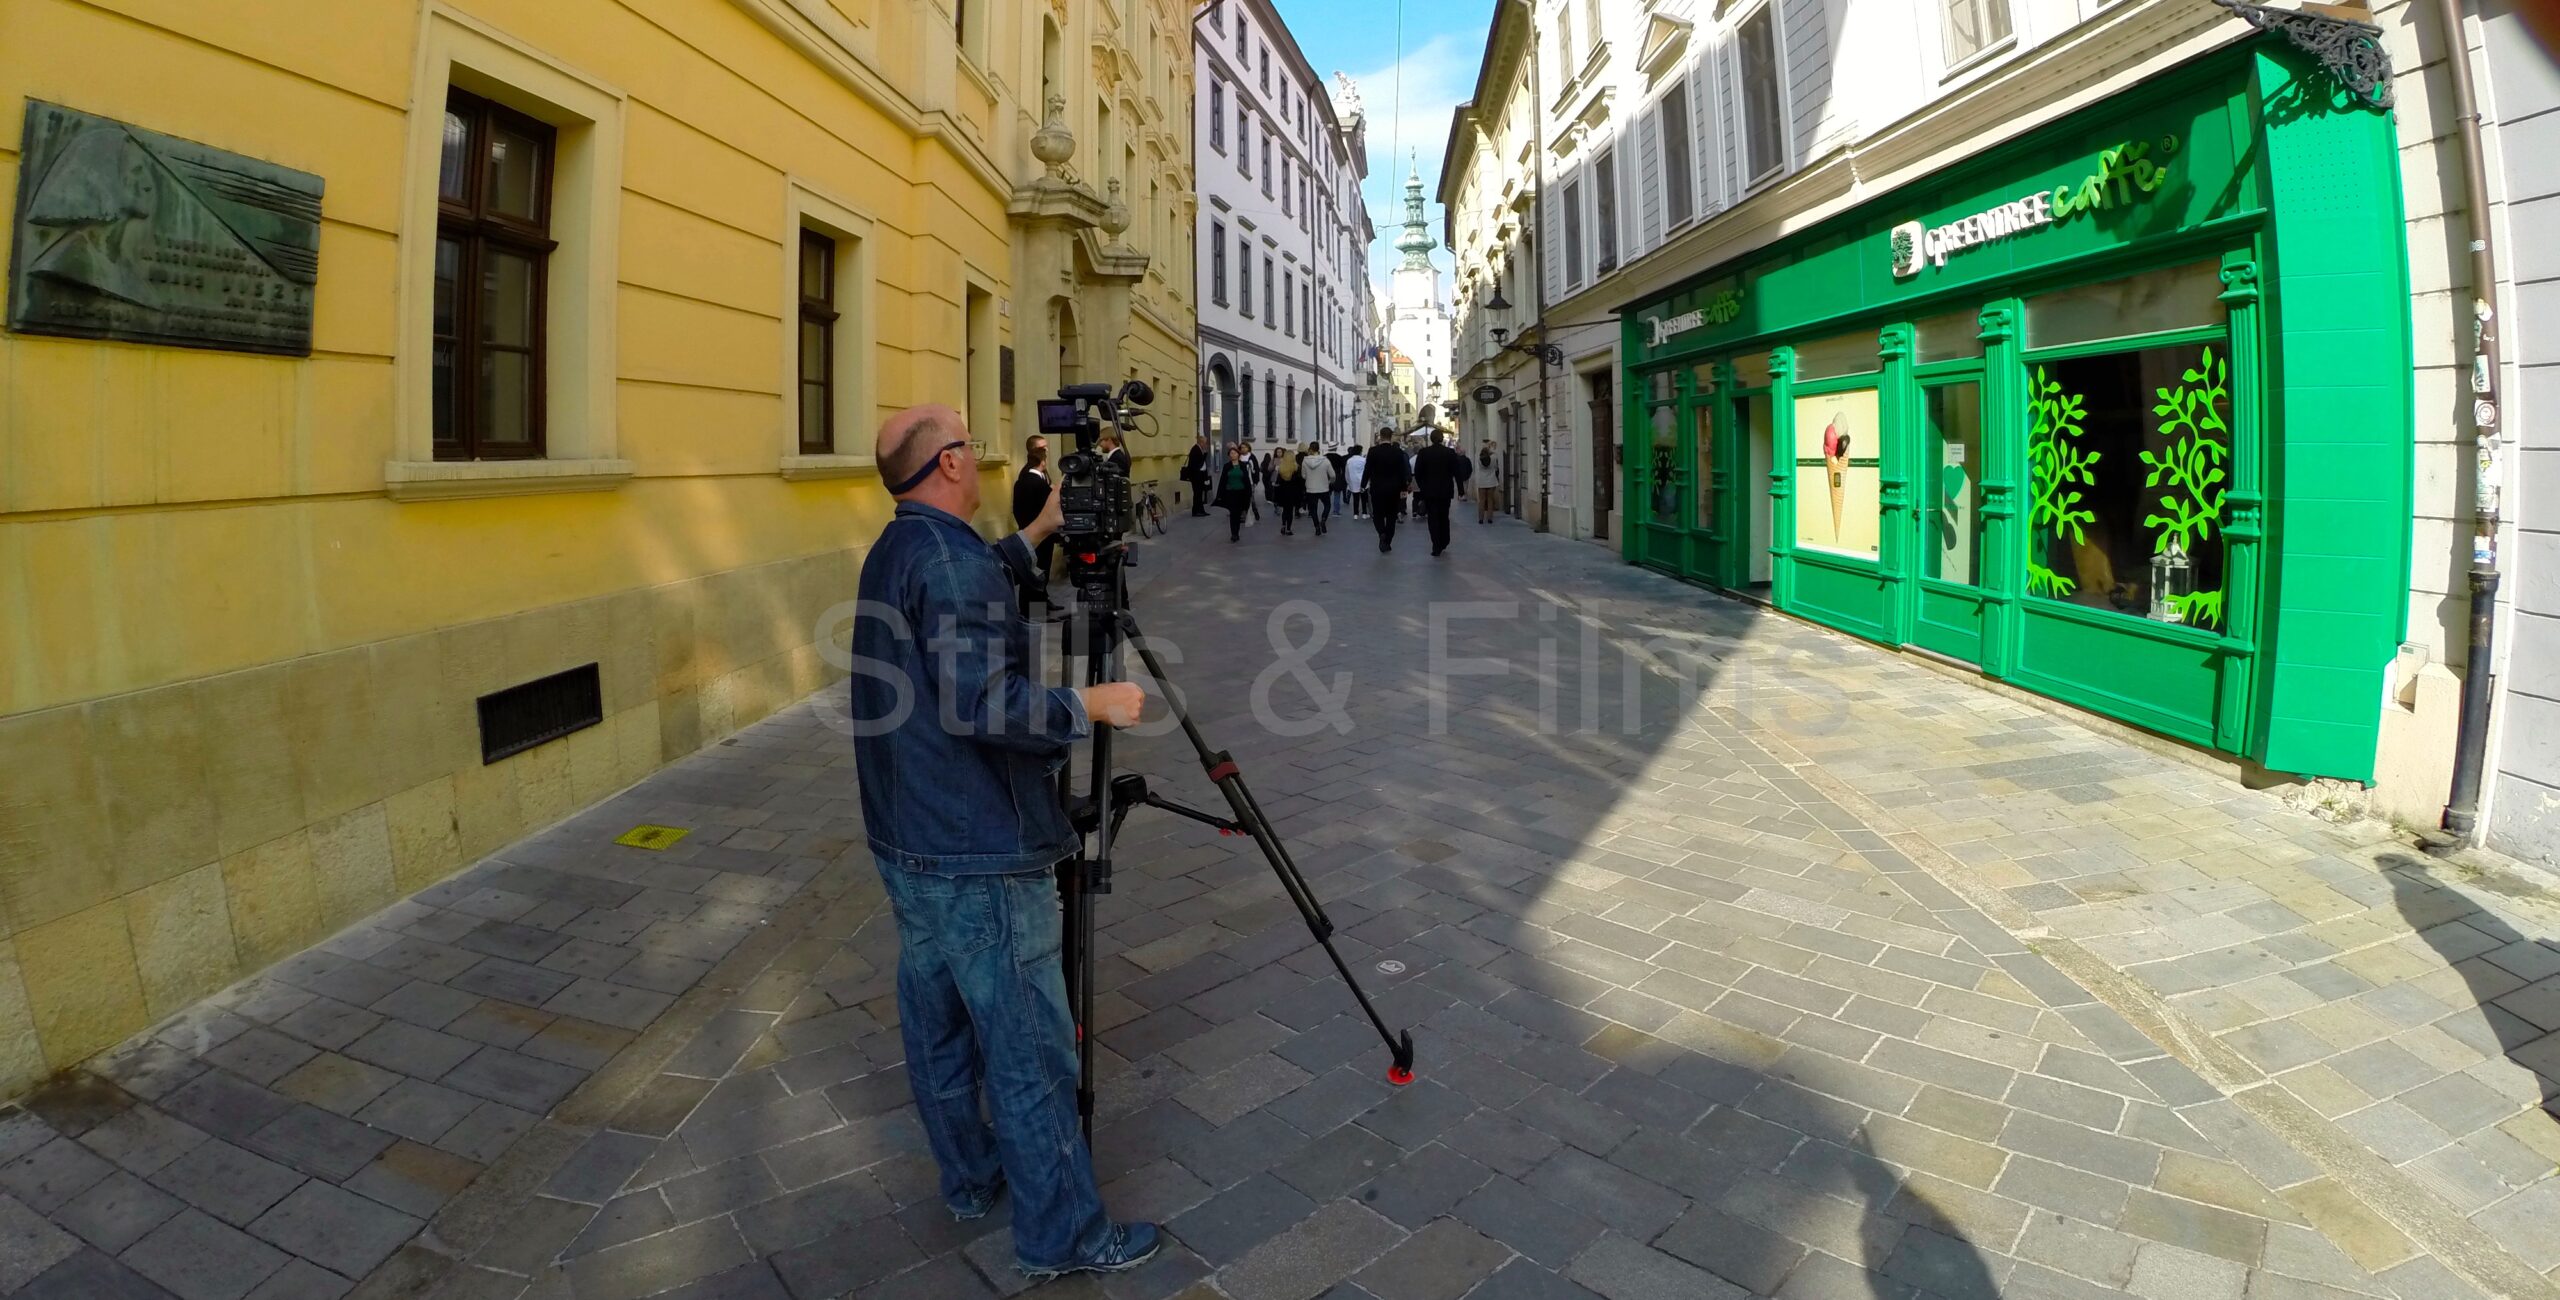 Bratislava filming